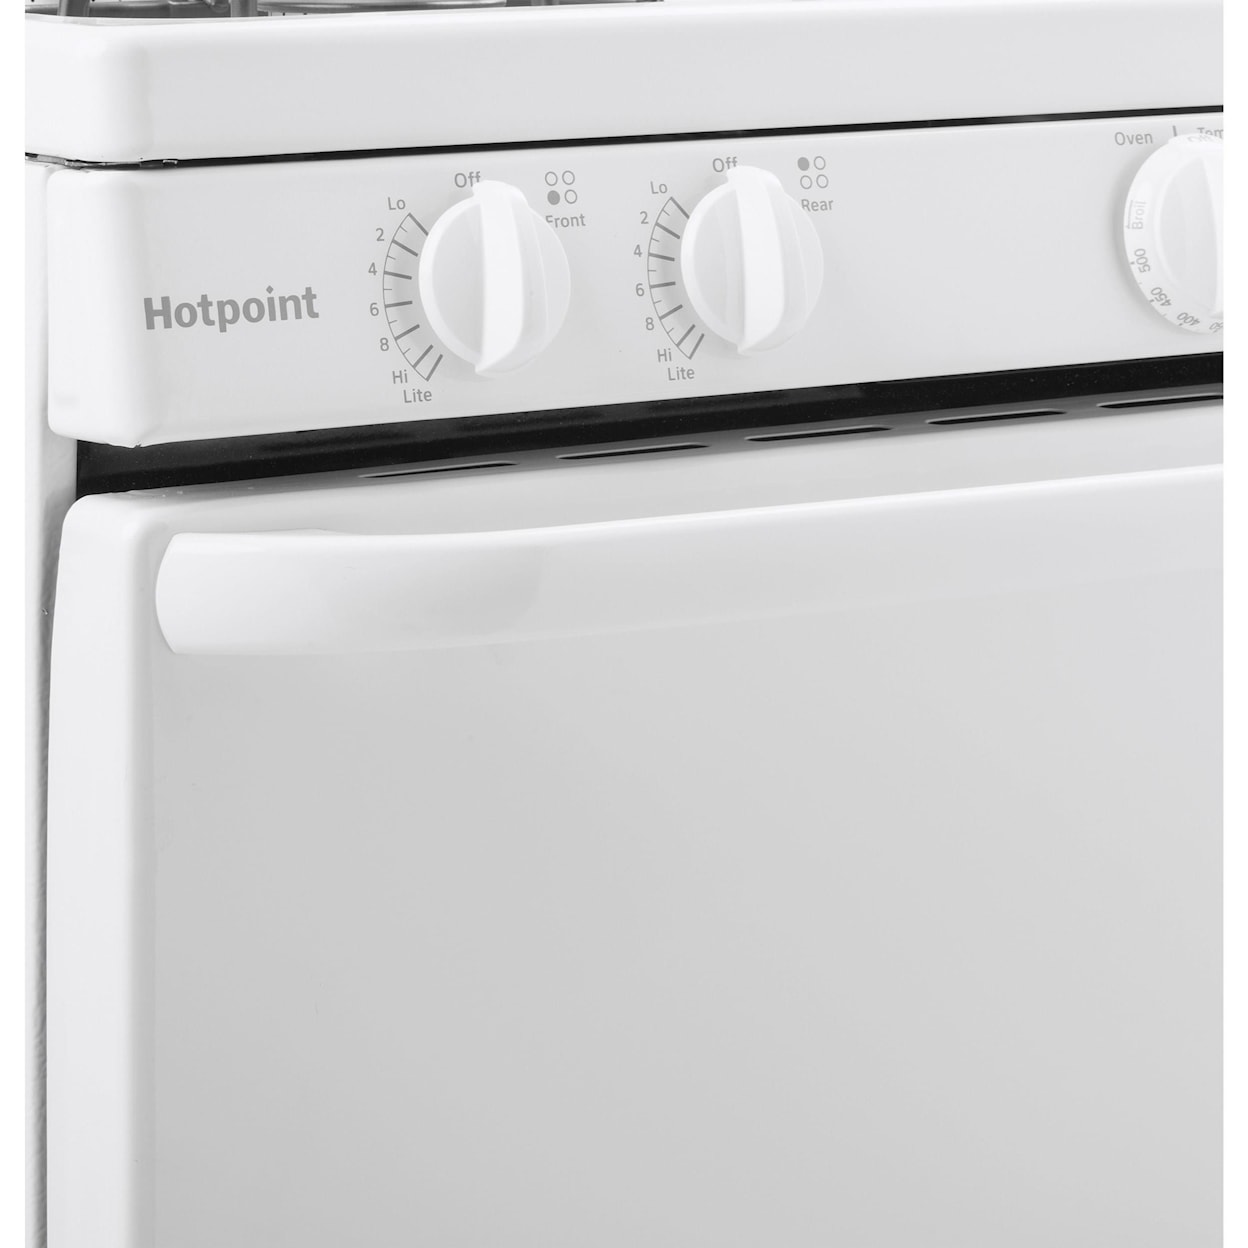 GE Appliances Hotpoint Range Hotpoint® 20" Free-Standing Electric Range